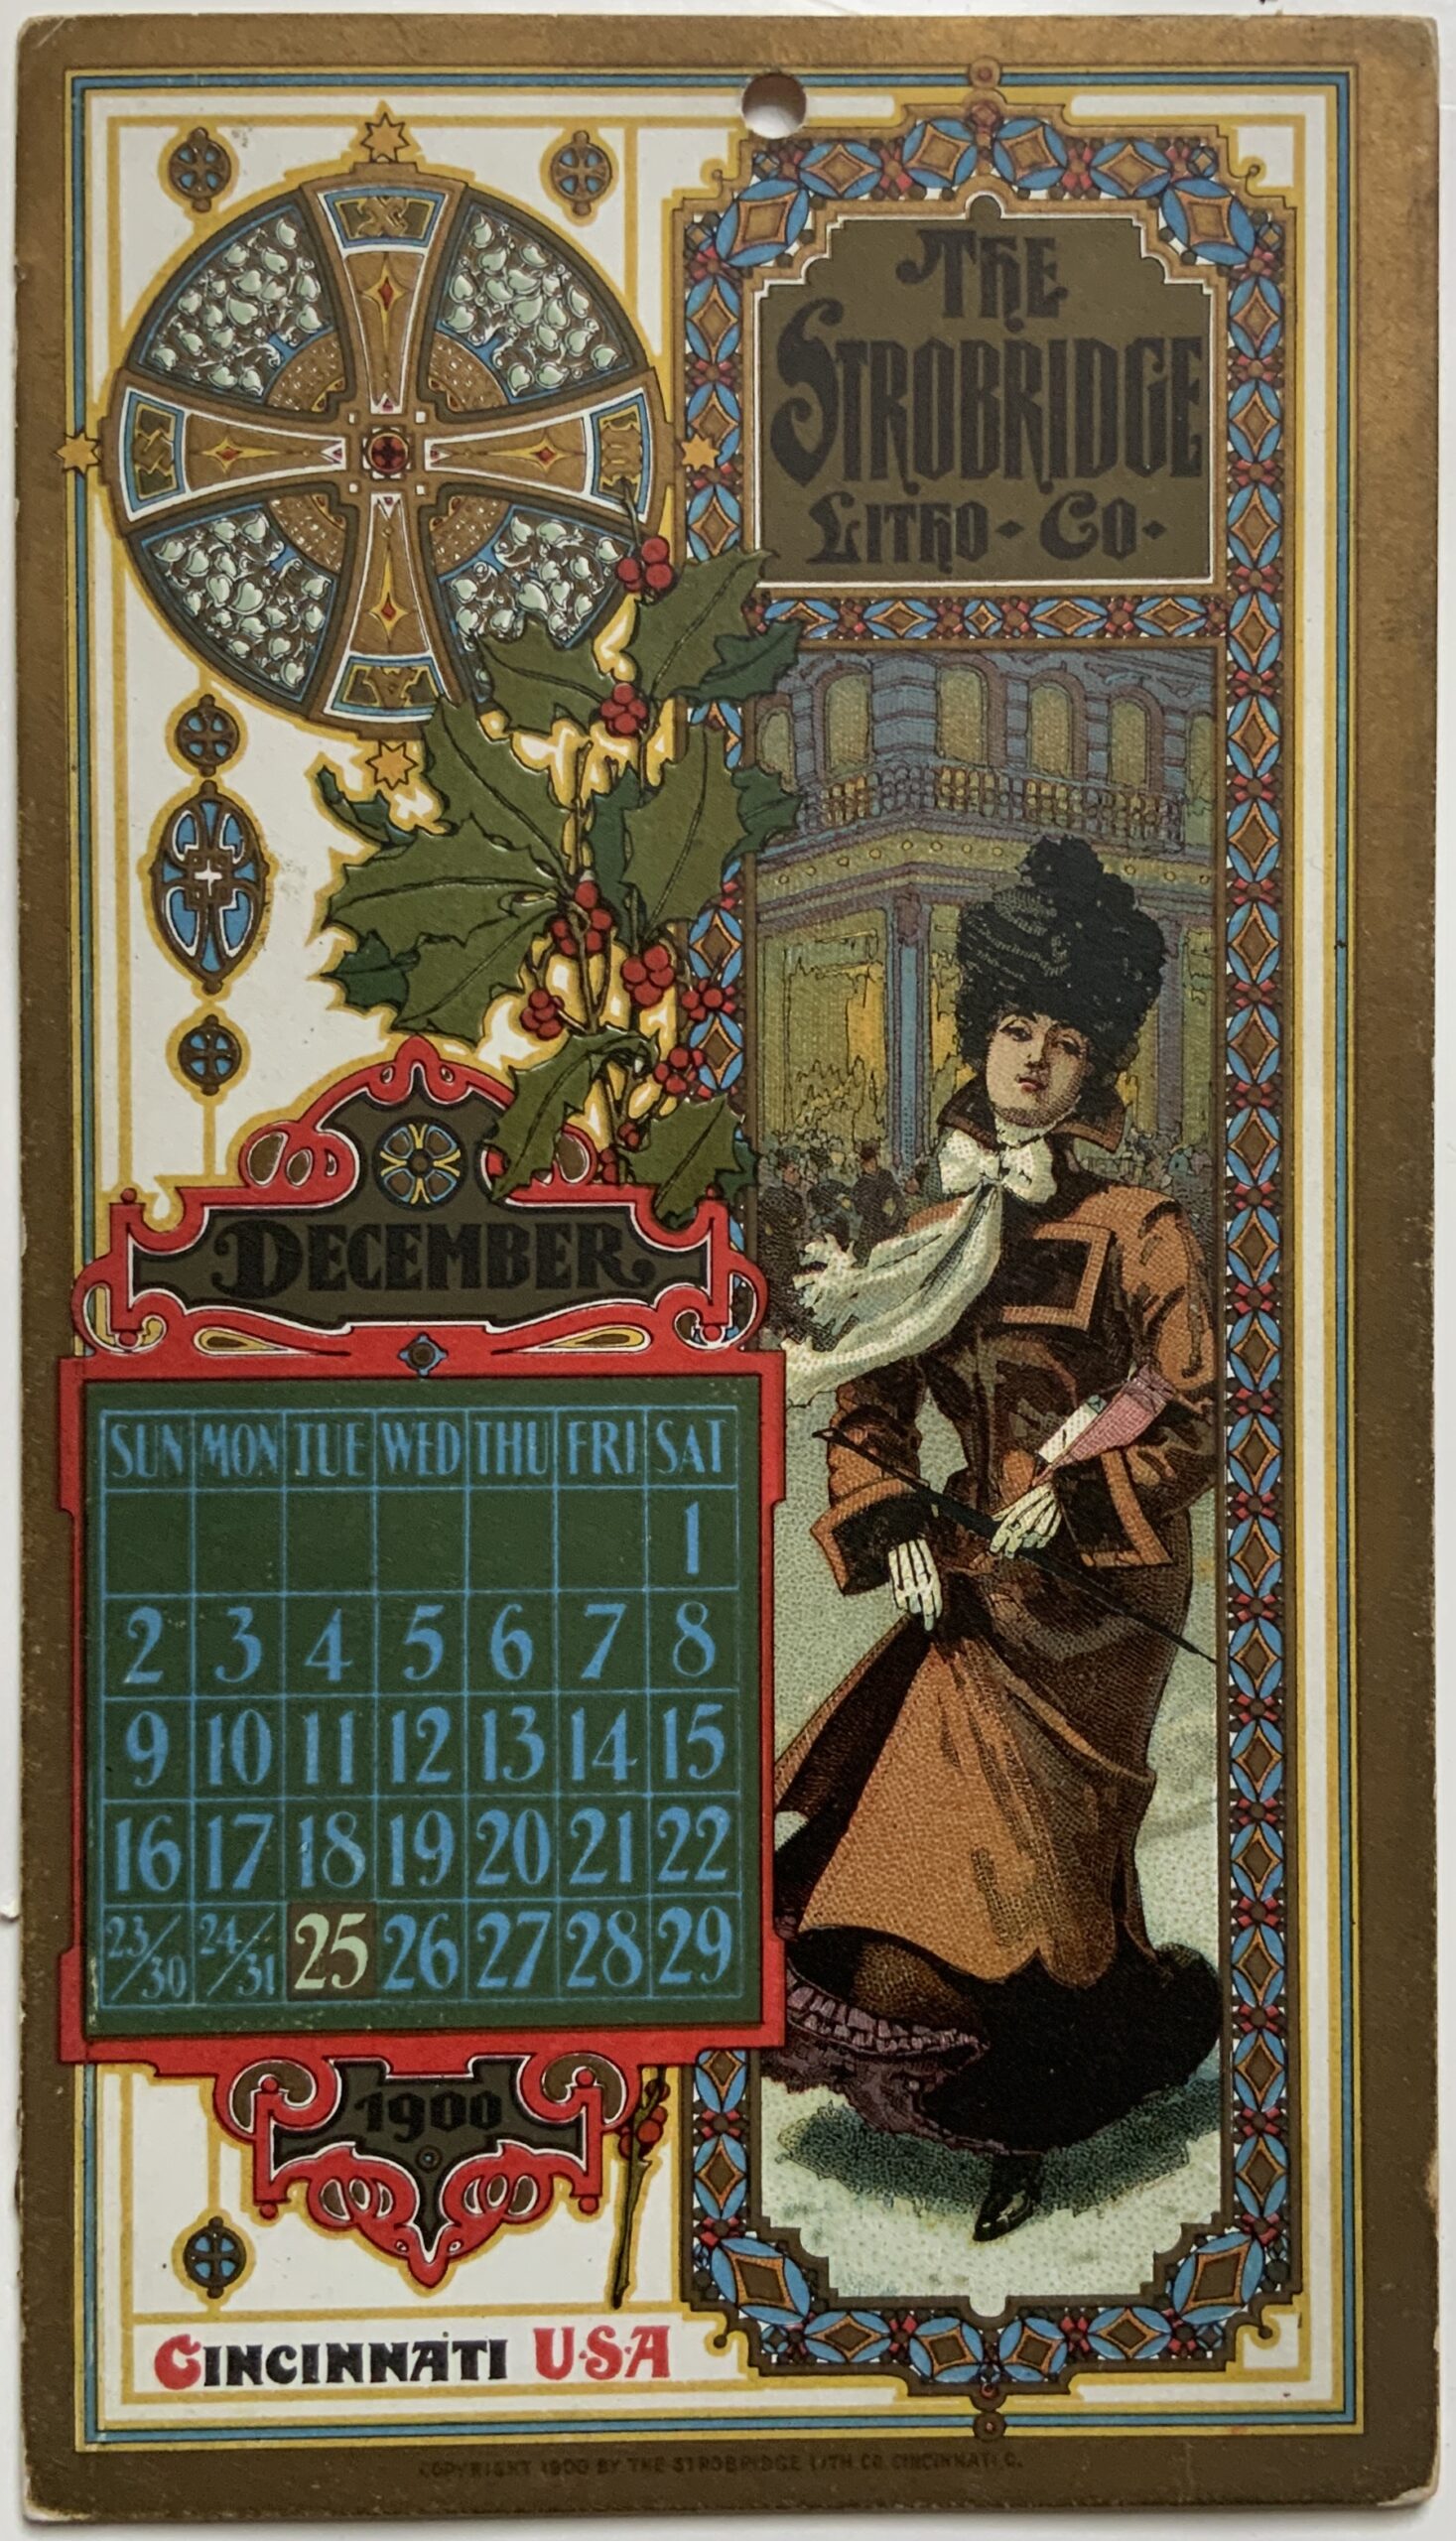 M156	STROBRIDGE LITHO CO. CARD 1900 - DECEMBER